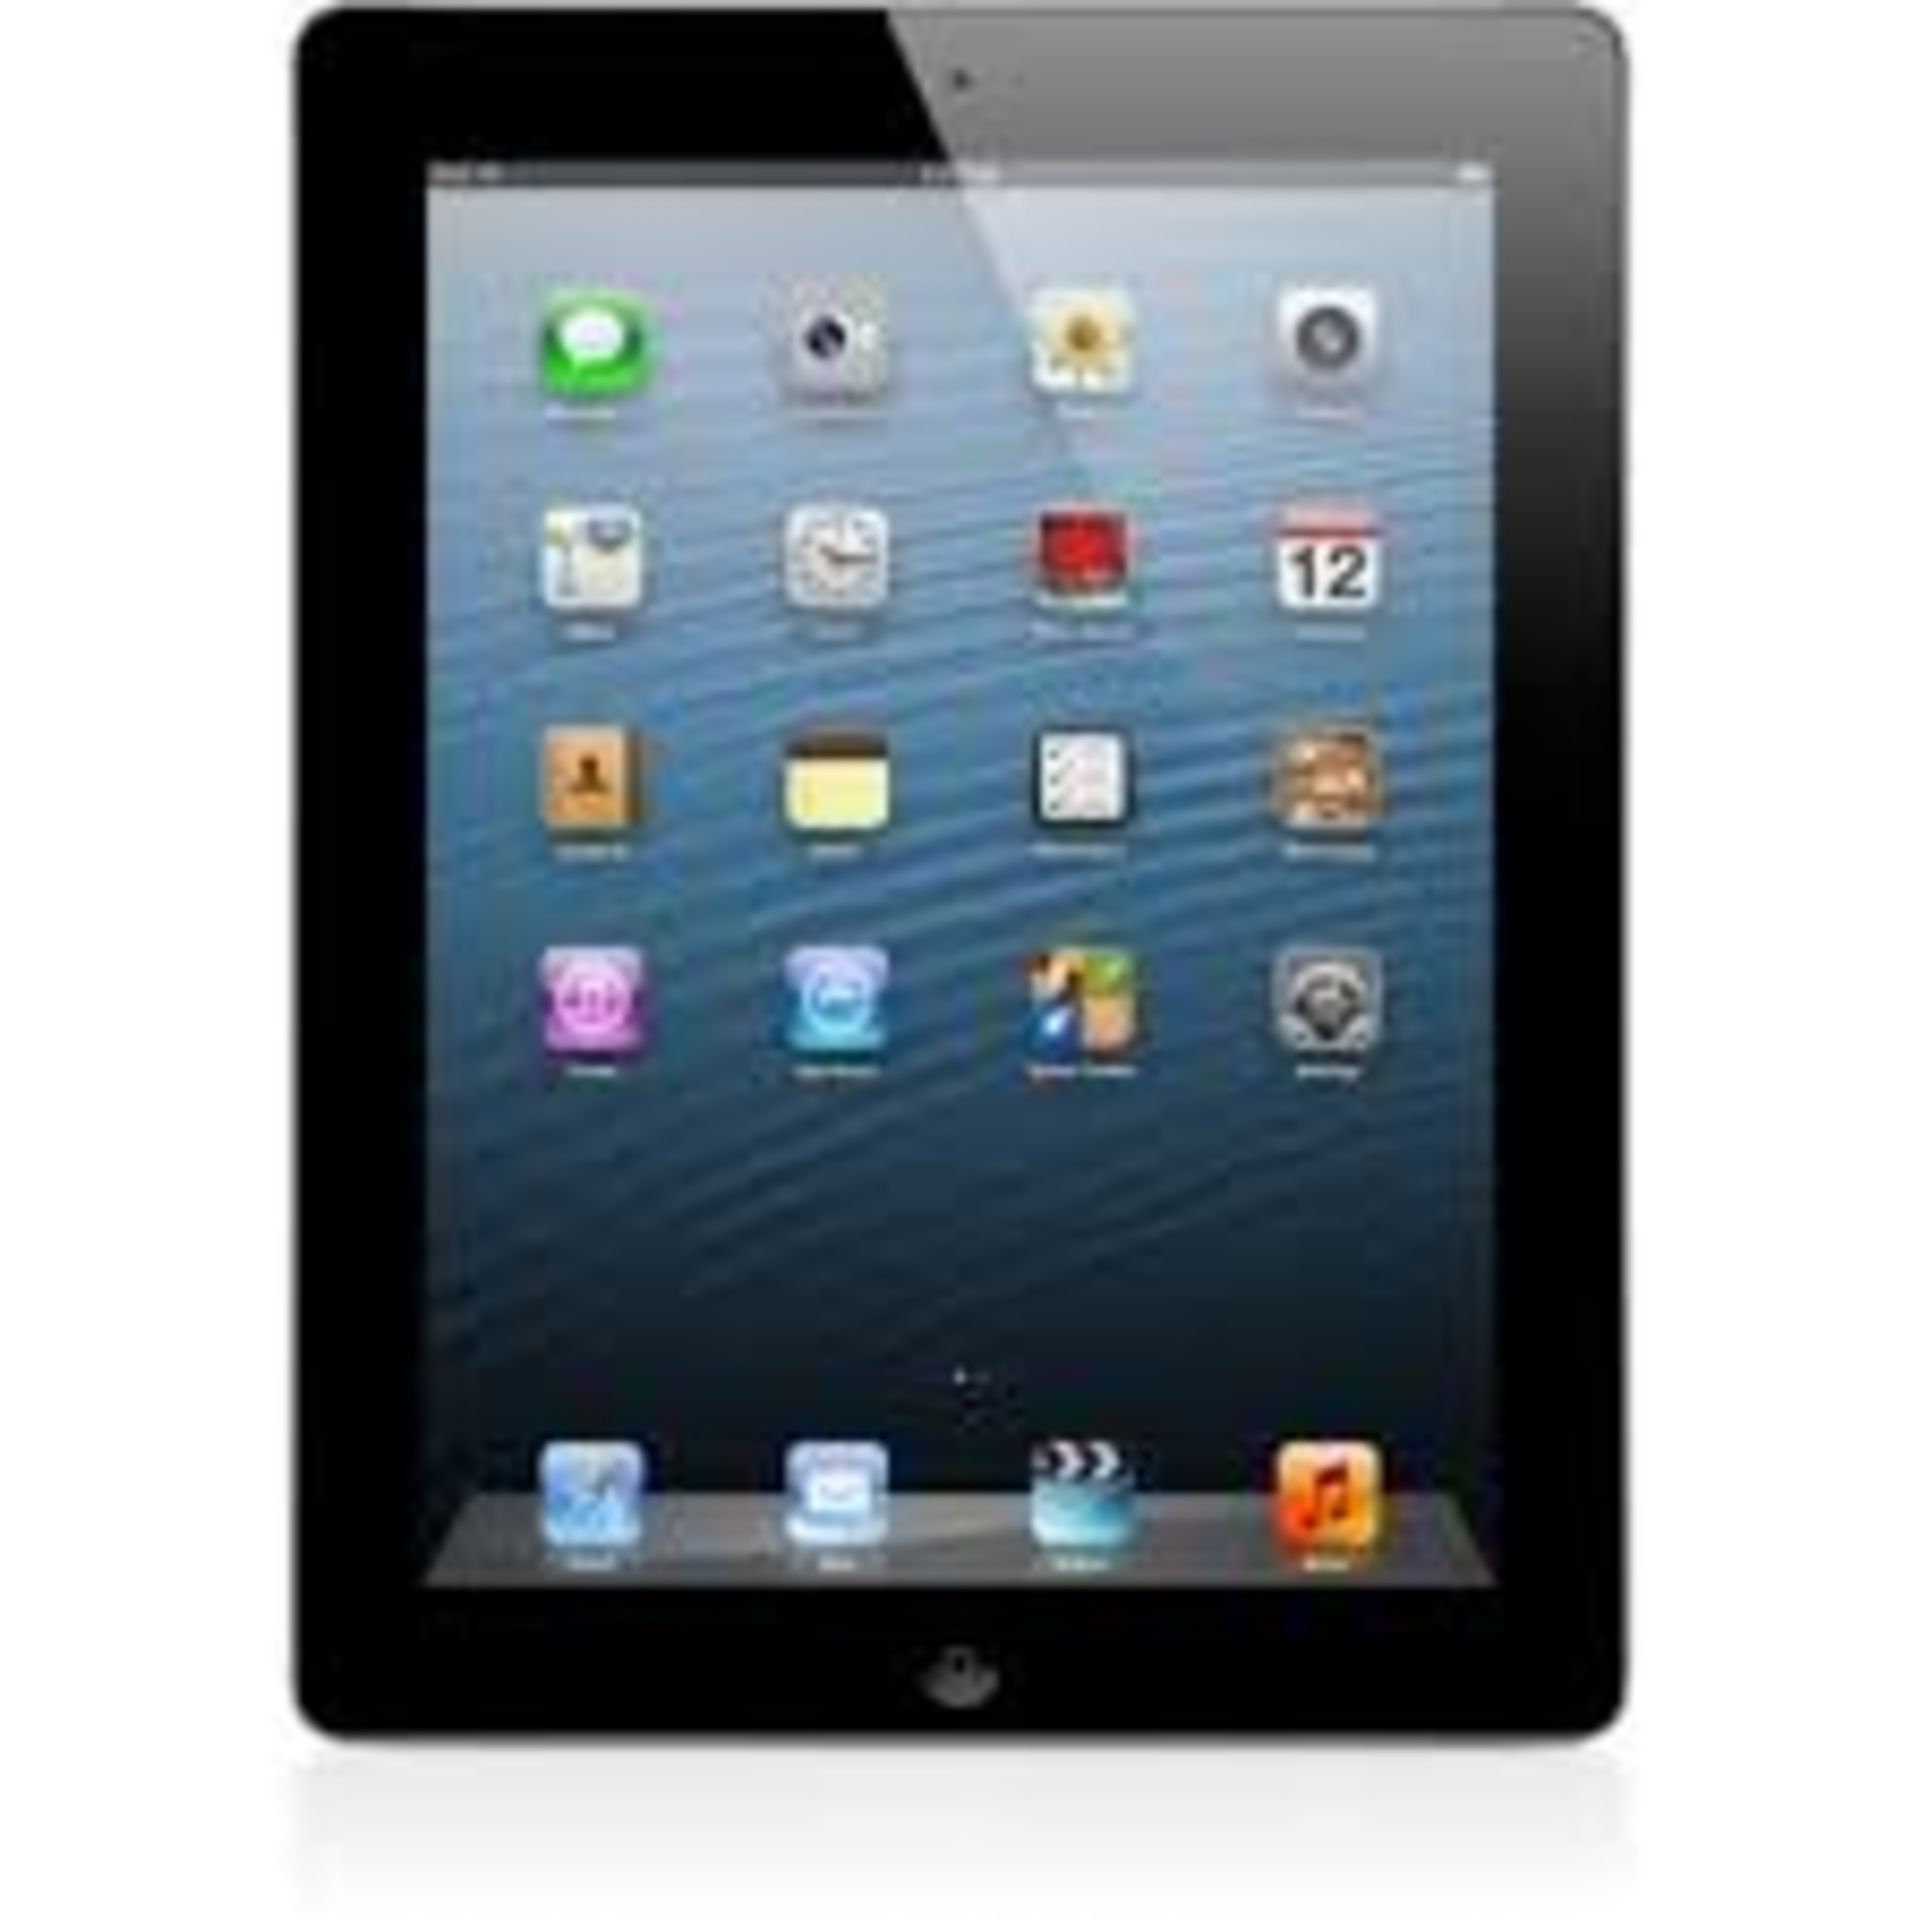 V *TRADE QTY* Grade B Apple iPad 4 Black 16gb 4g Wi-Fi In Generic Box X 3 YOUR BID PRICE TO BE